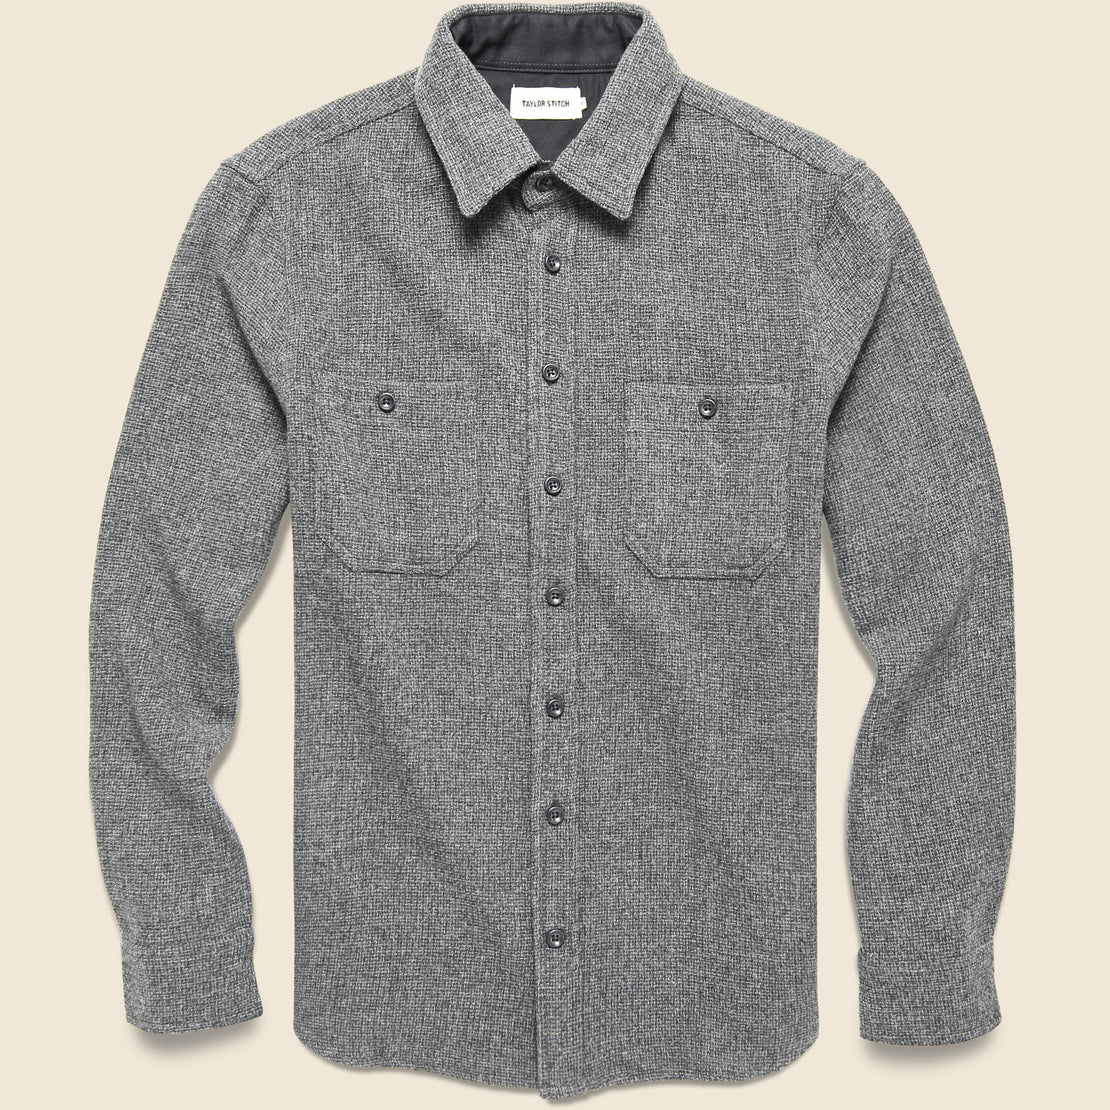 Taylor Stitch Service Shirt - Ash Melange Wool